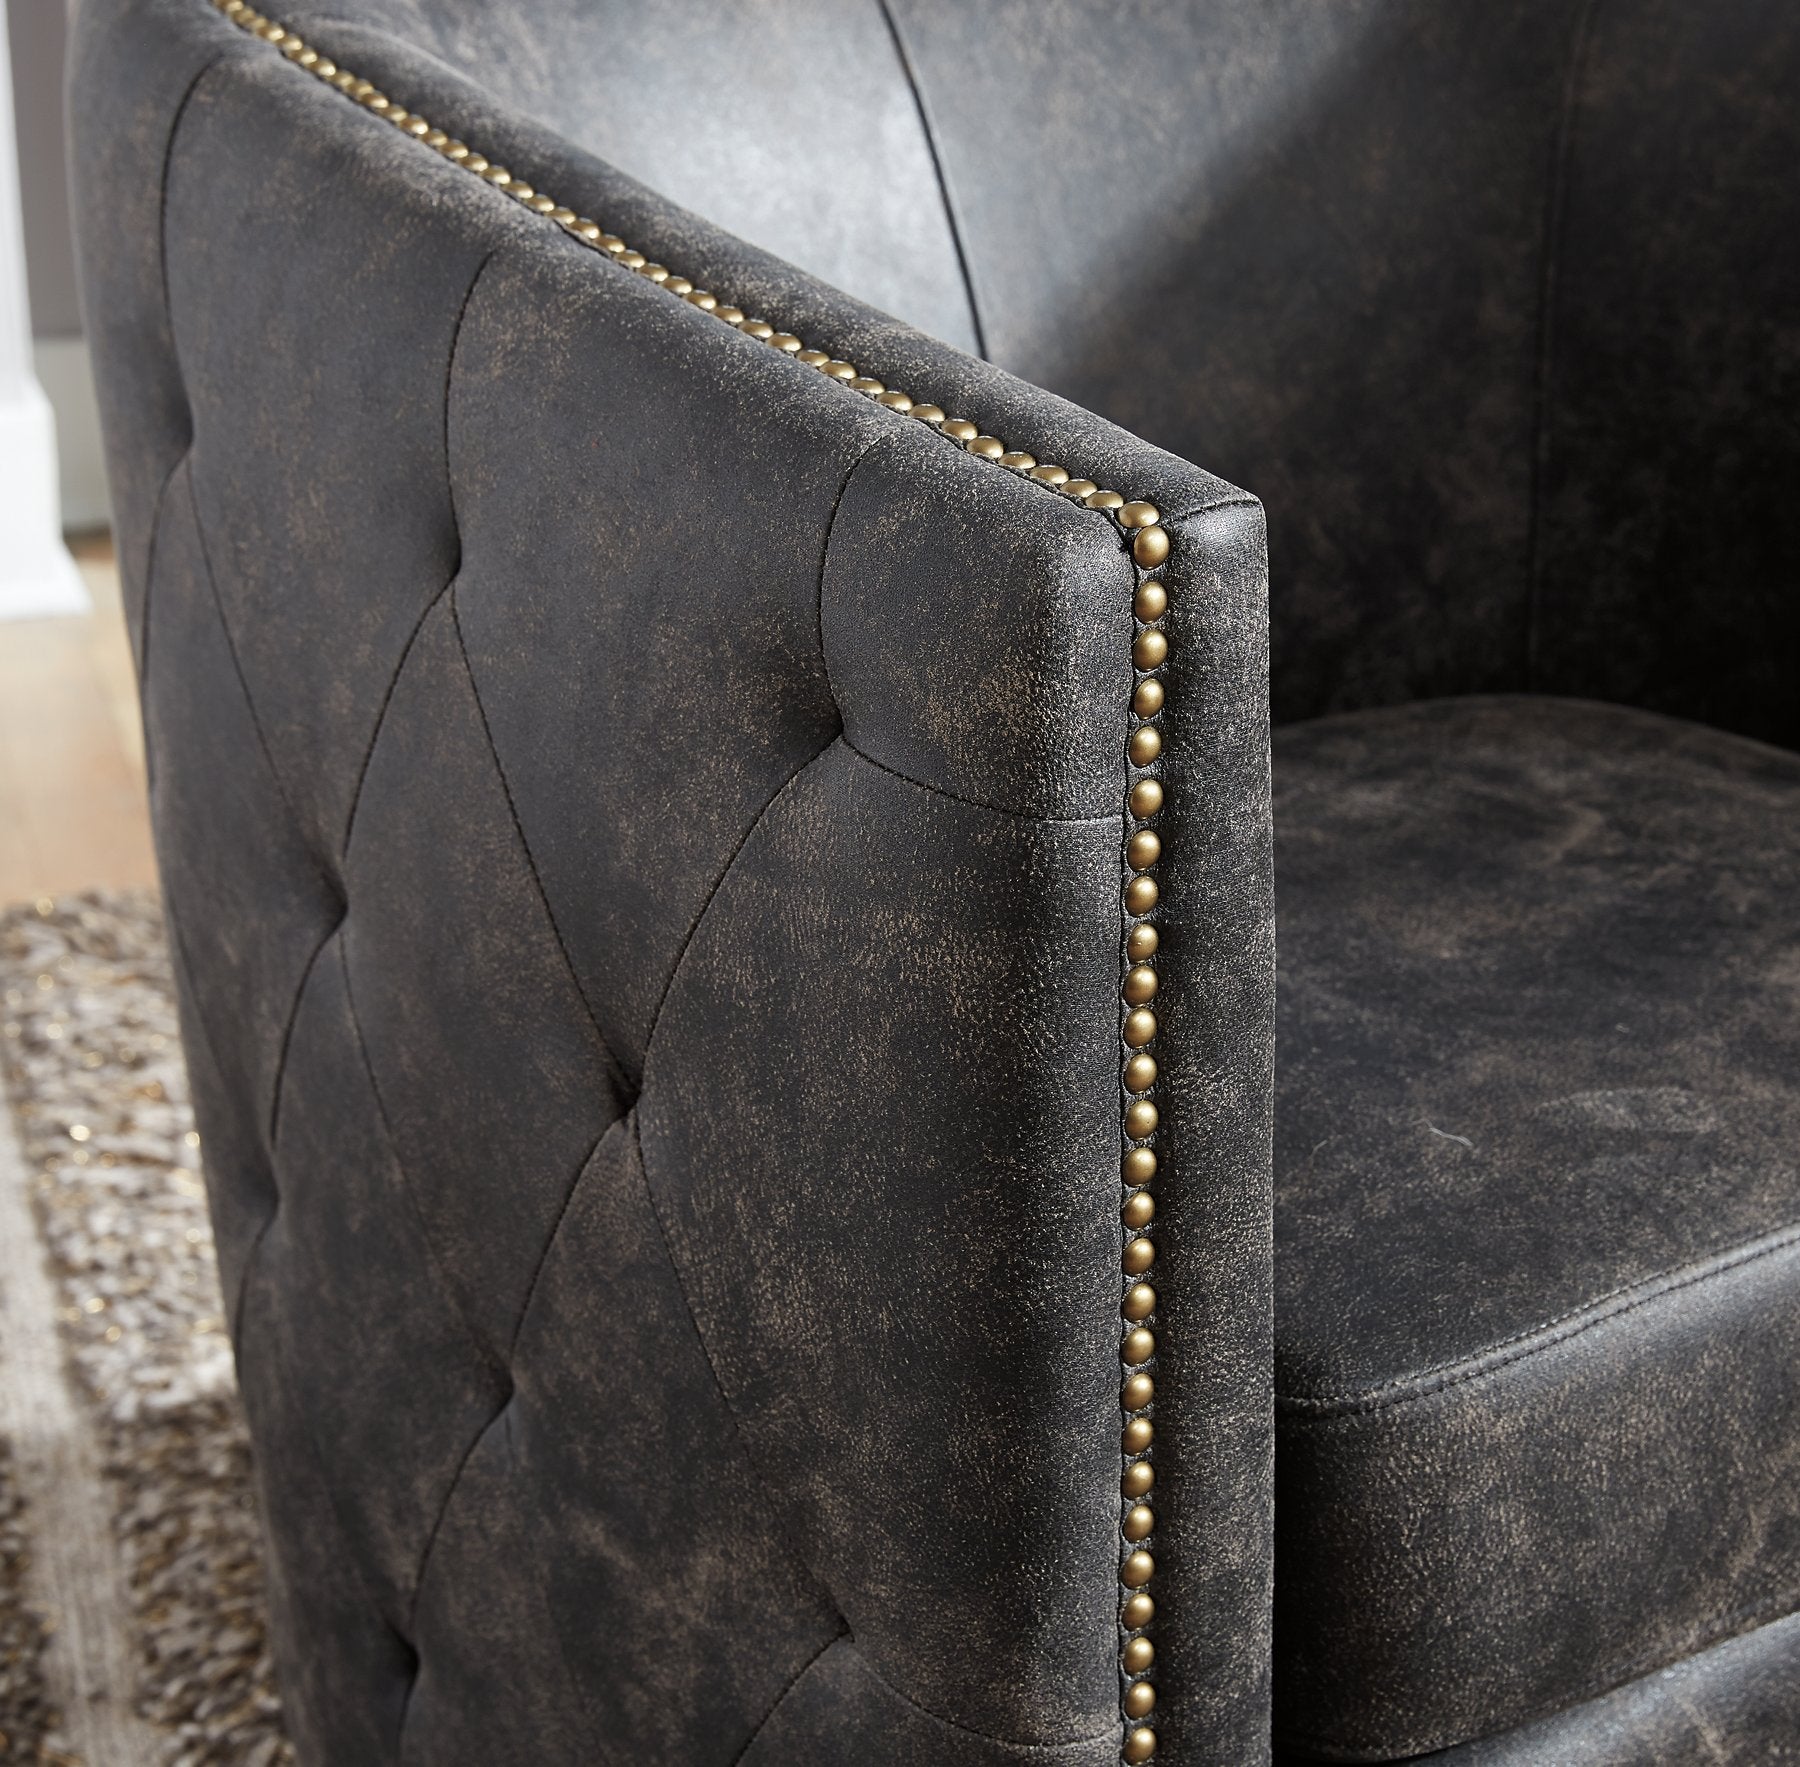 Brentlow Accent Chair - Half Price Furniture